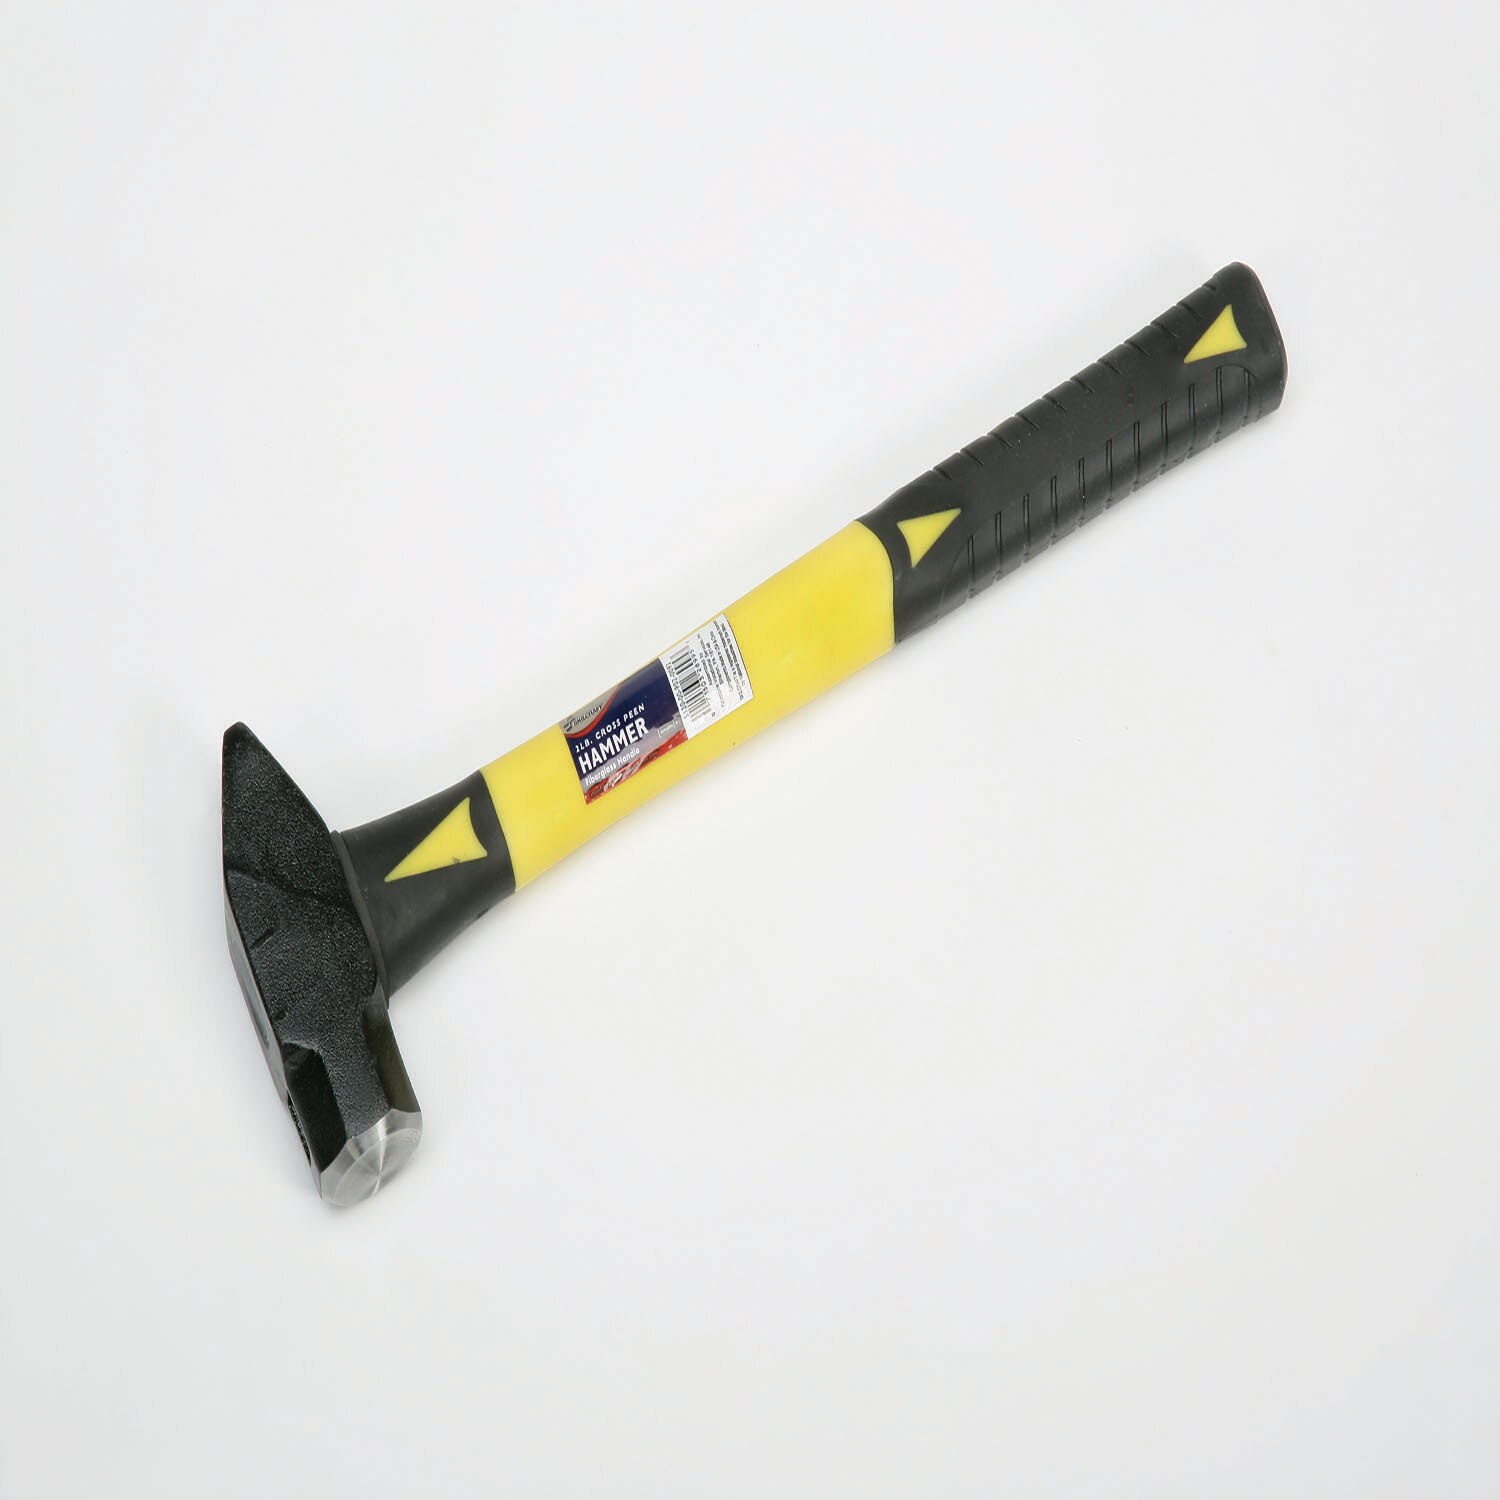 Hammer - 2 lb, Cross-Peen, 16" Fiberglass Handle, Cushioned Grip